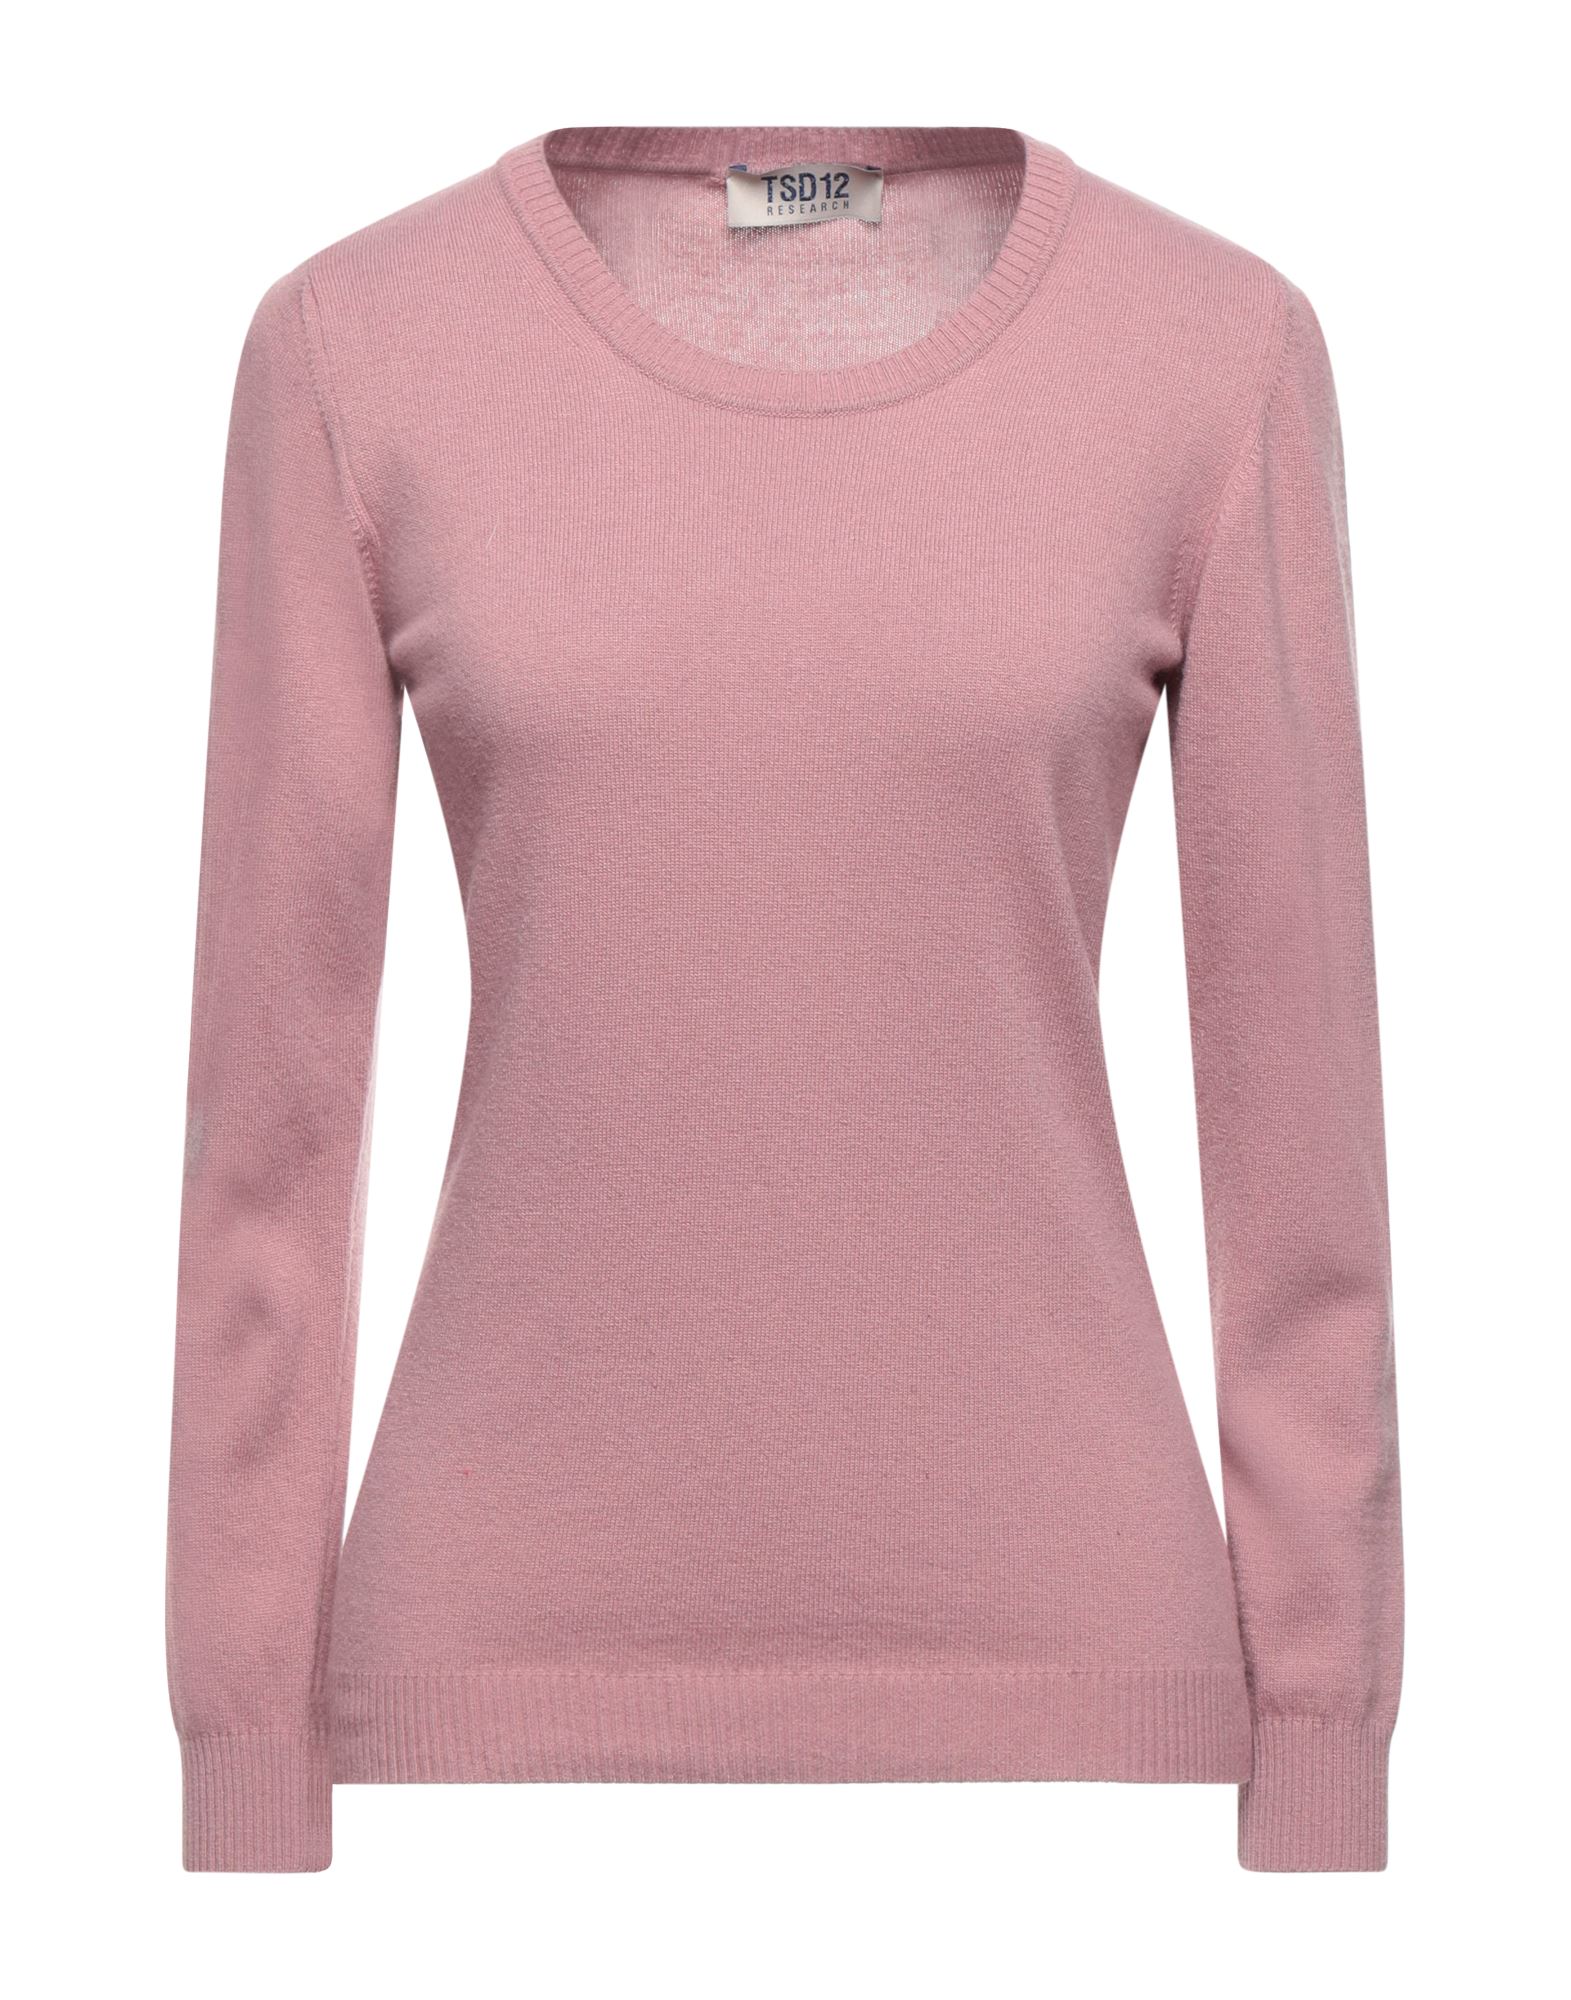 Tsd12 Sweaters In Pastel Pink